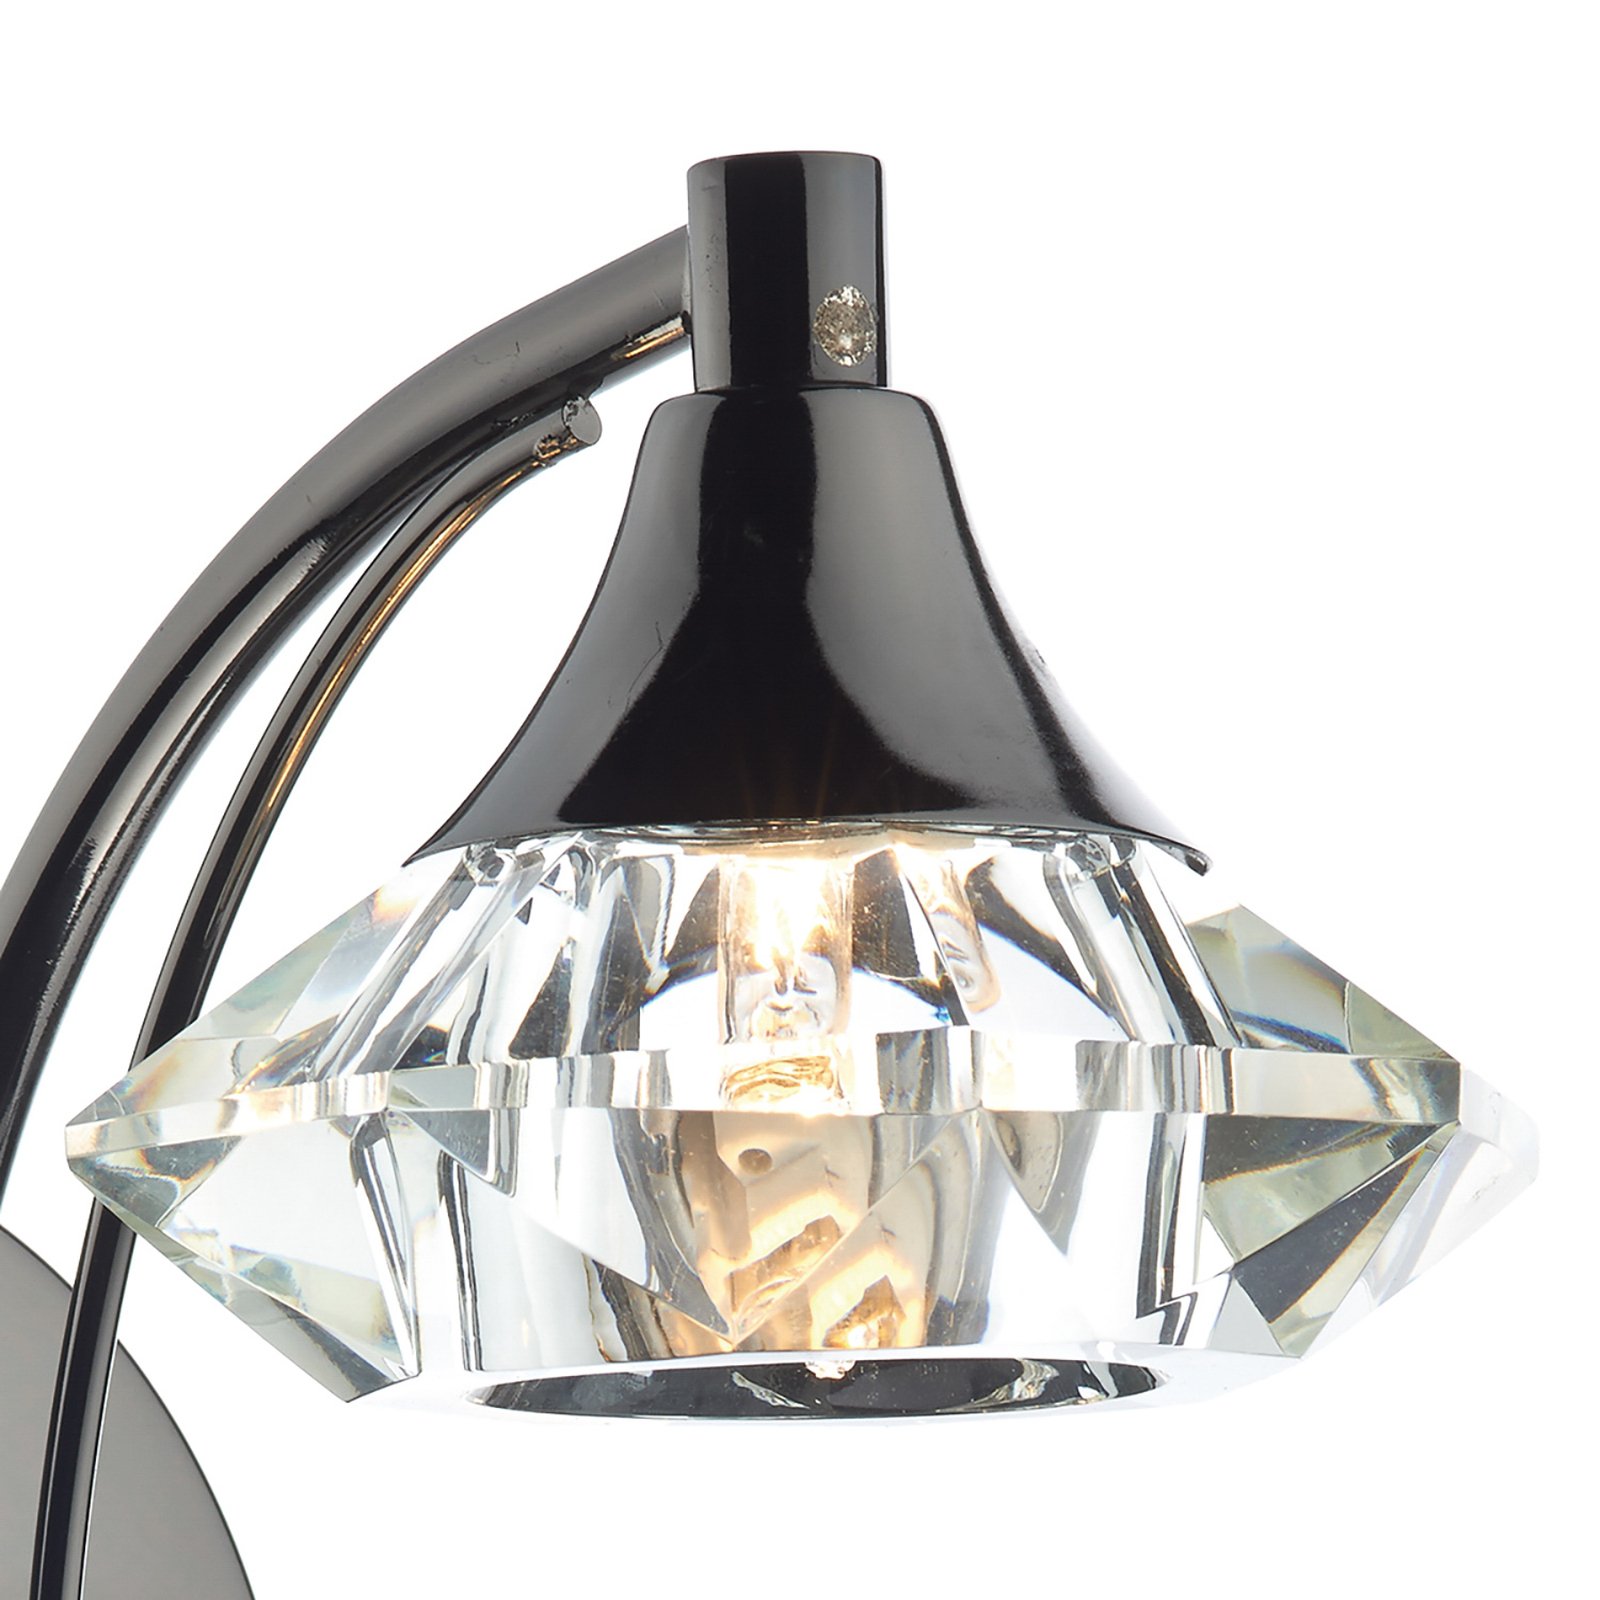 Luther wandlamp met kristal, zwart-chroom